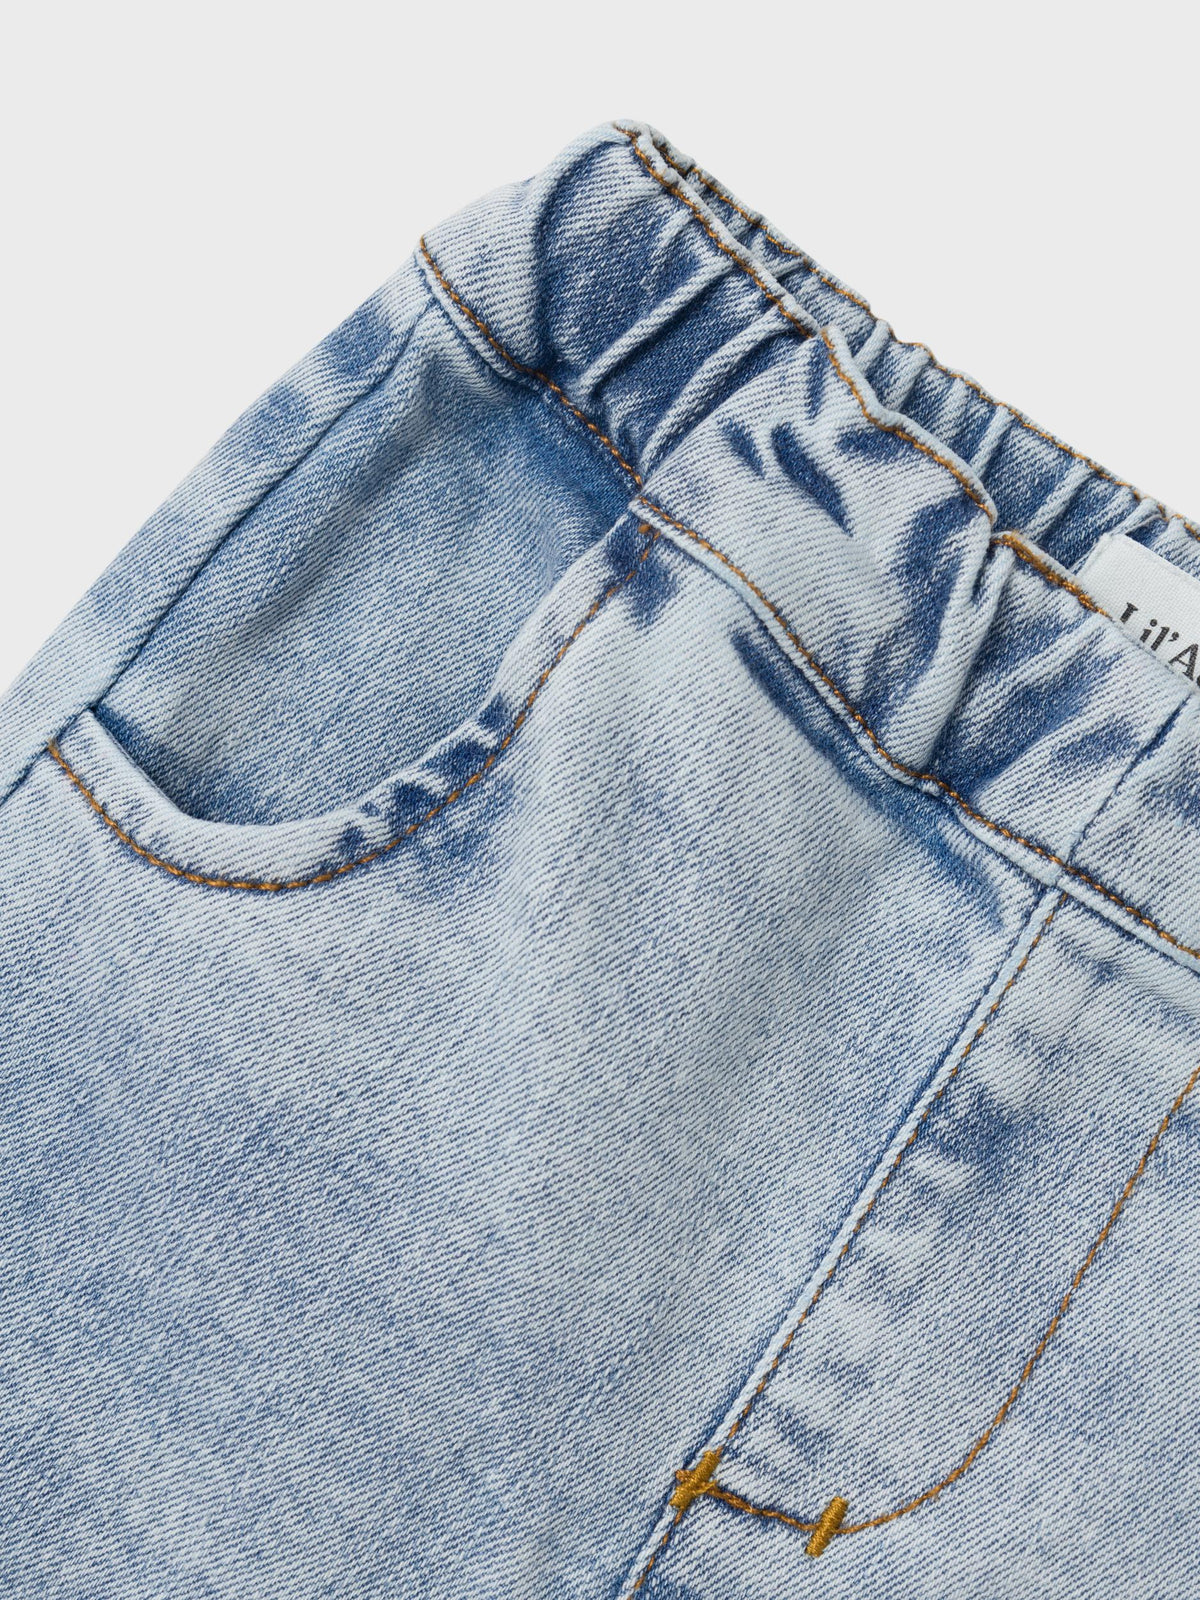 Lil&#39; Atelier bløde jeans - Ben - Light Blue Denim - Bukser - MamaMilla